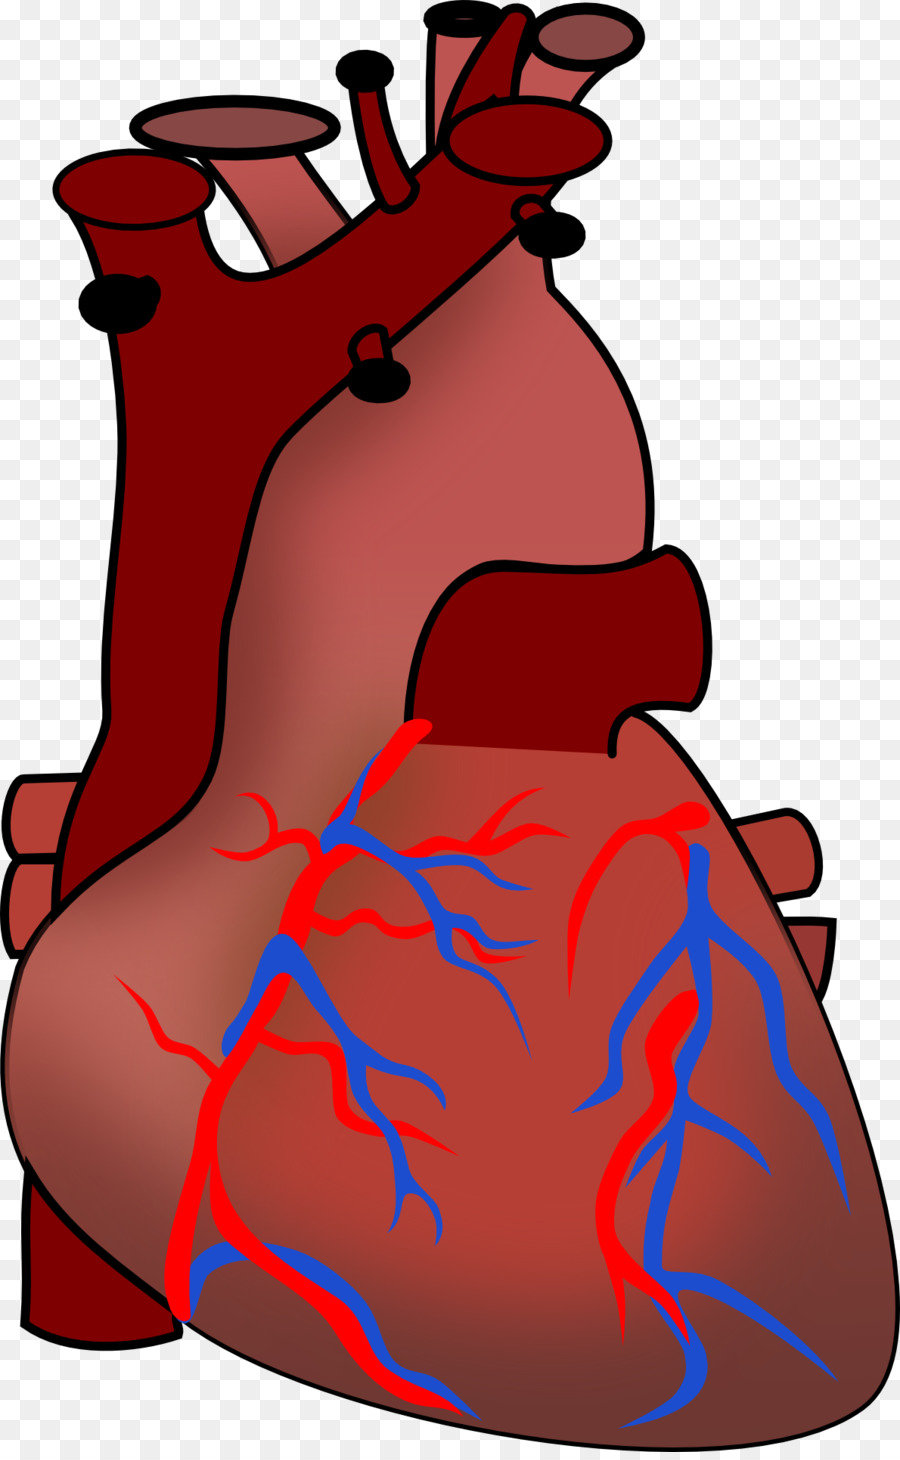 Jantung Anatomi Tubuh Manusia Clip Art Menggambar Ilustrasi